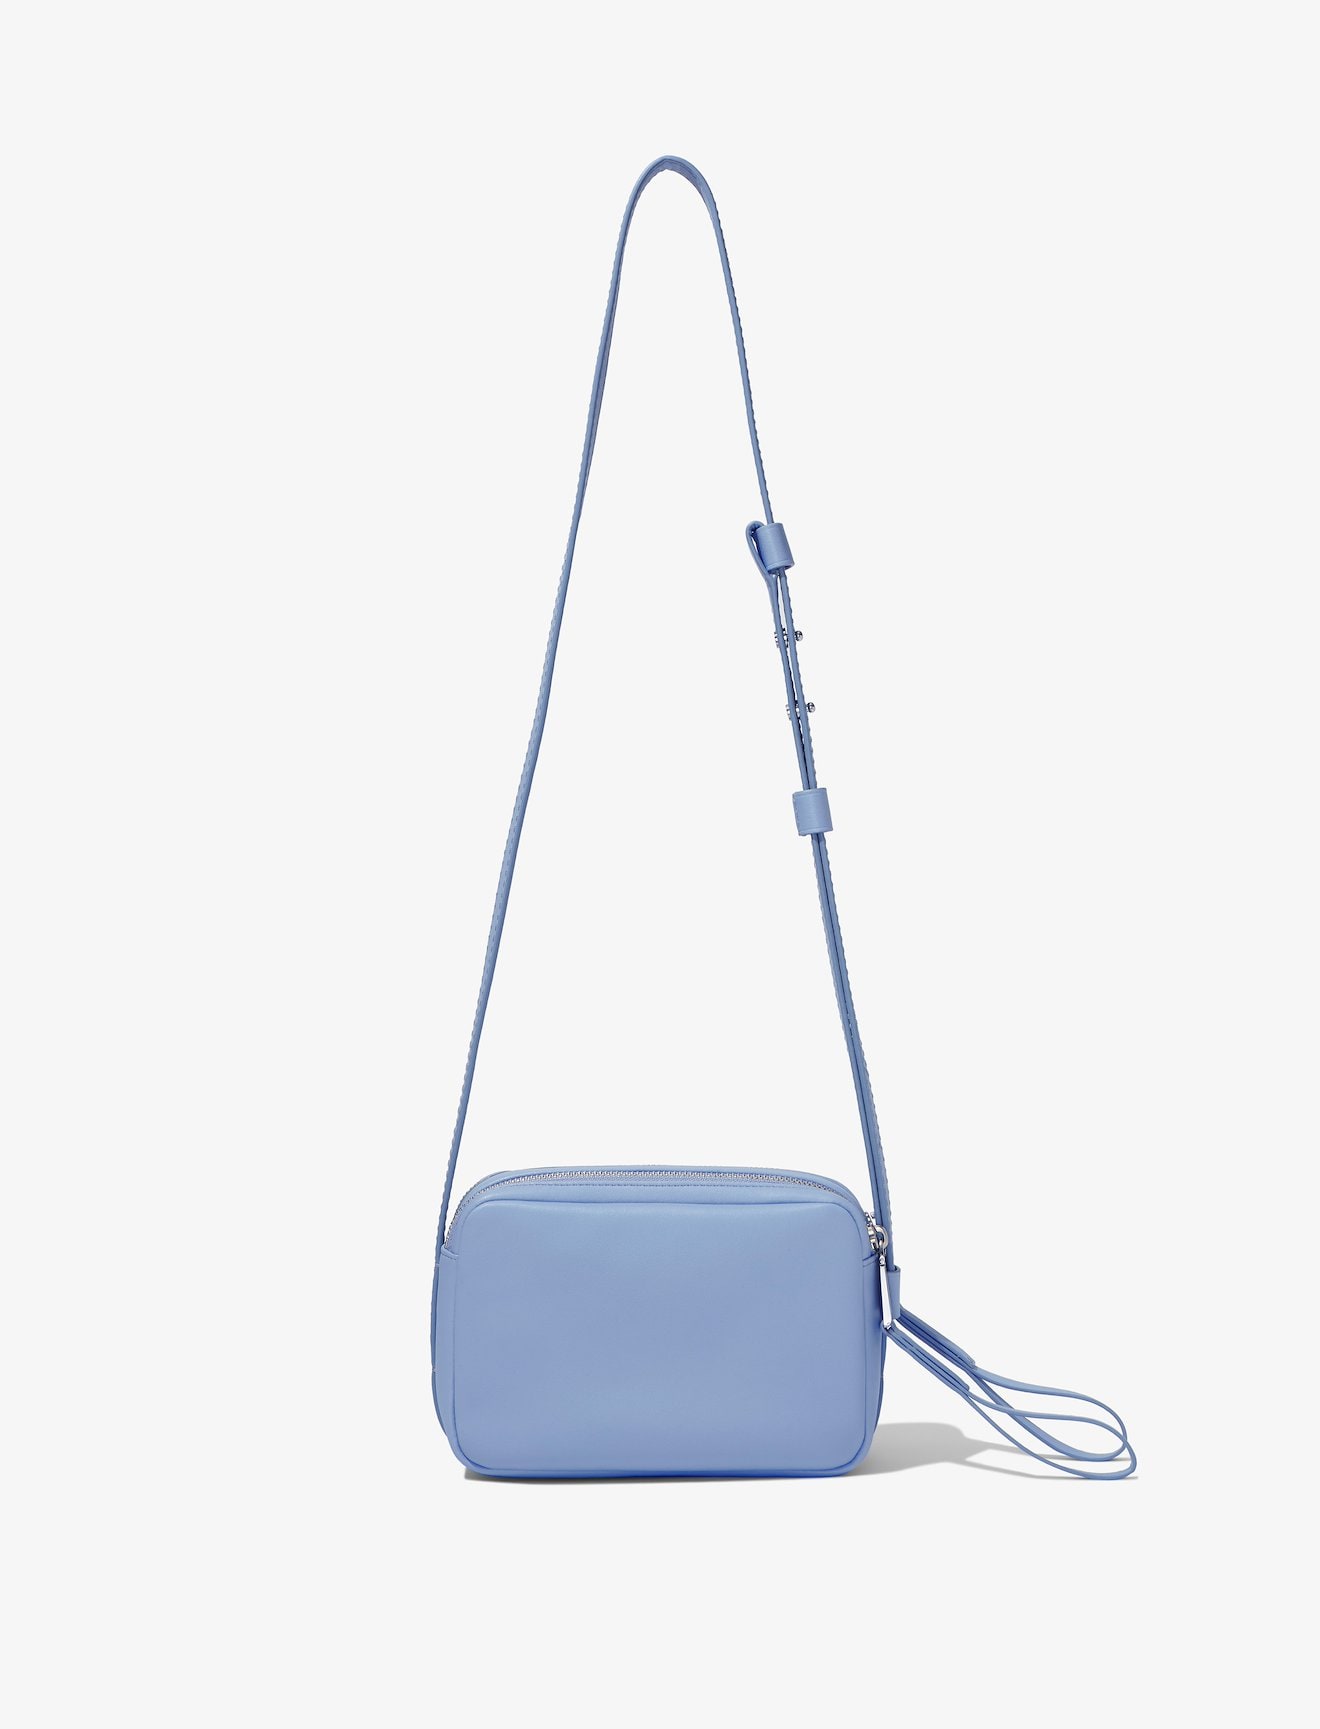 Watts Leather Camera Bag in blue | Proenza Schouler